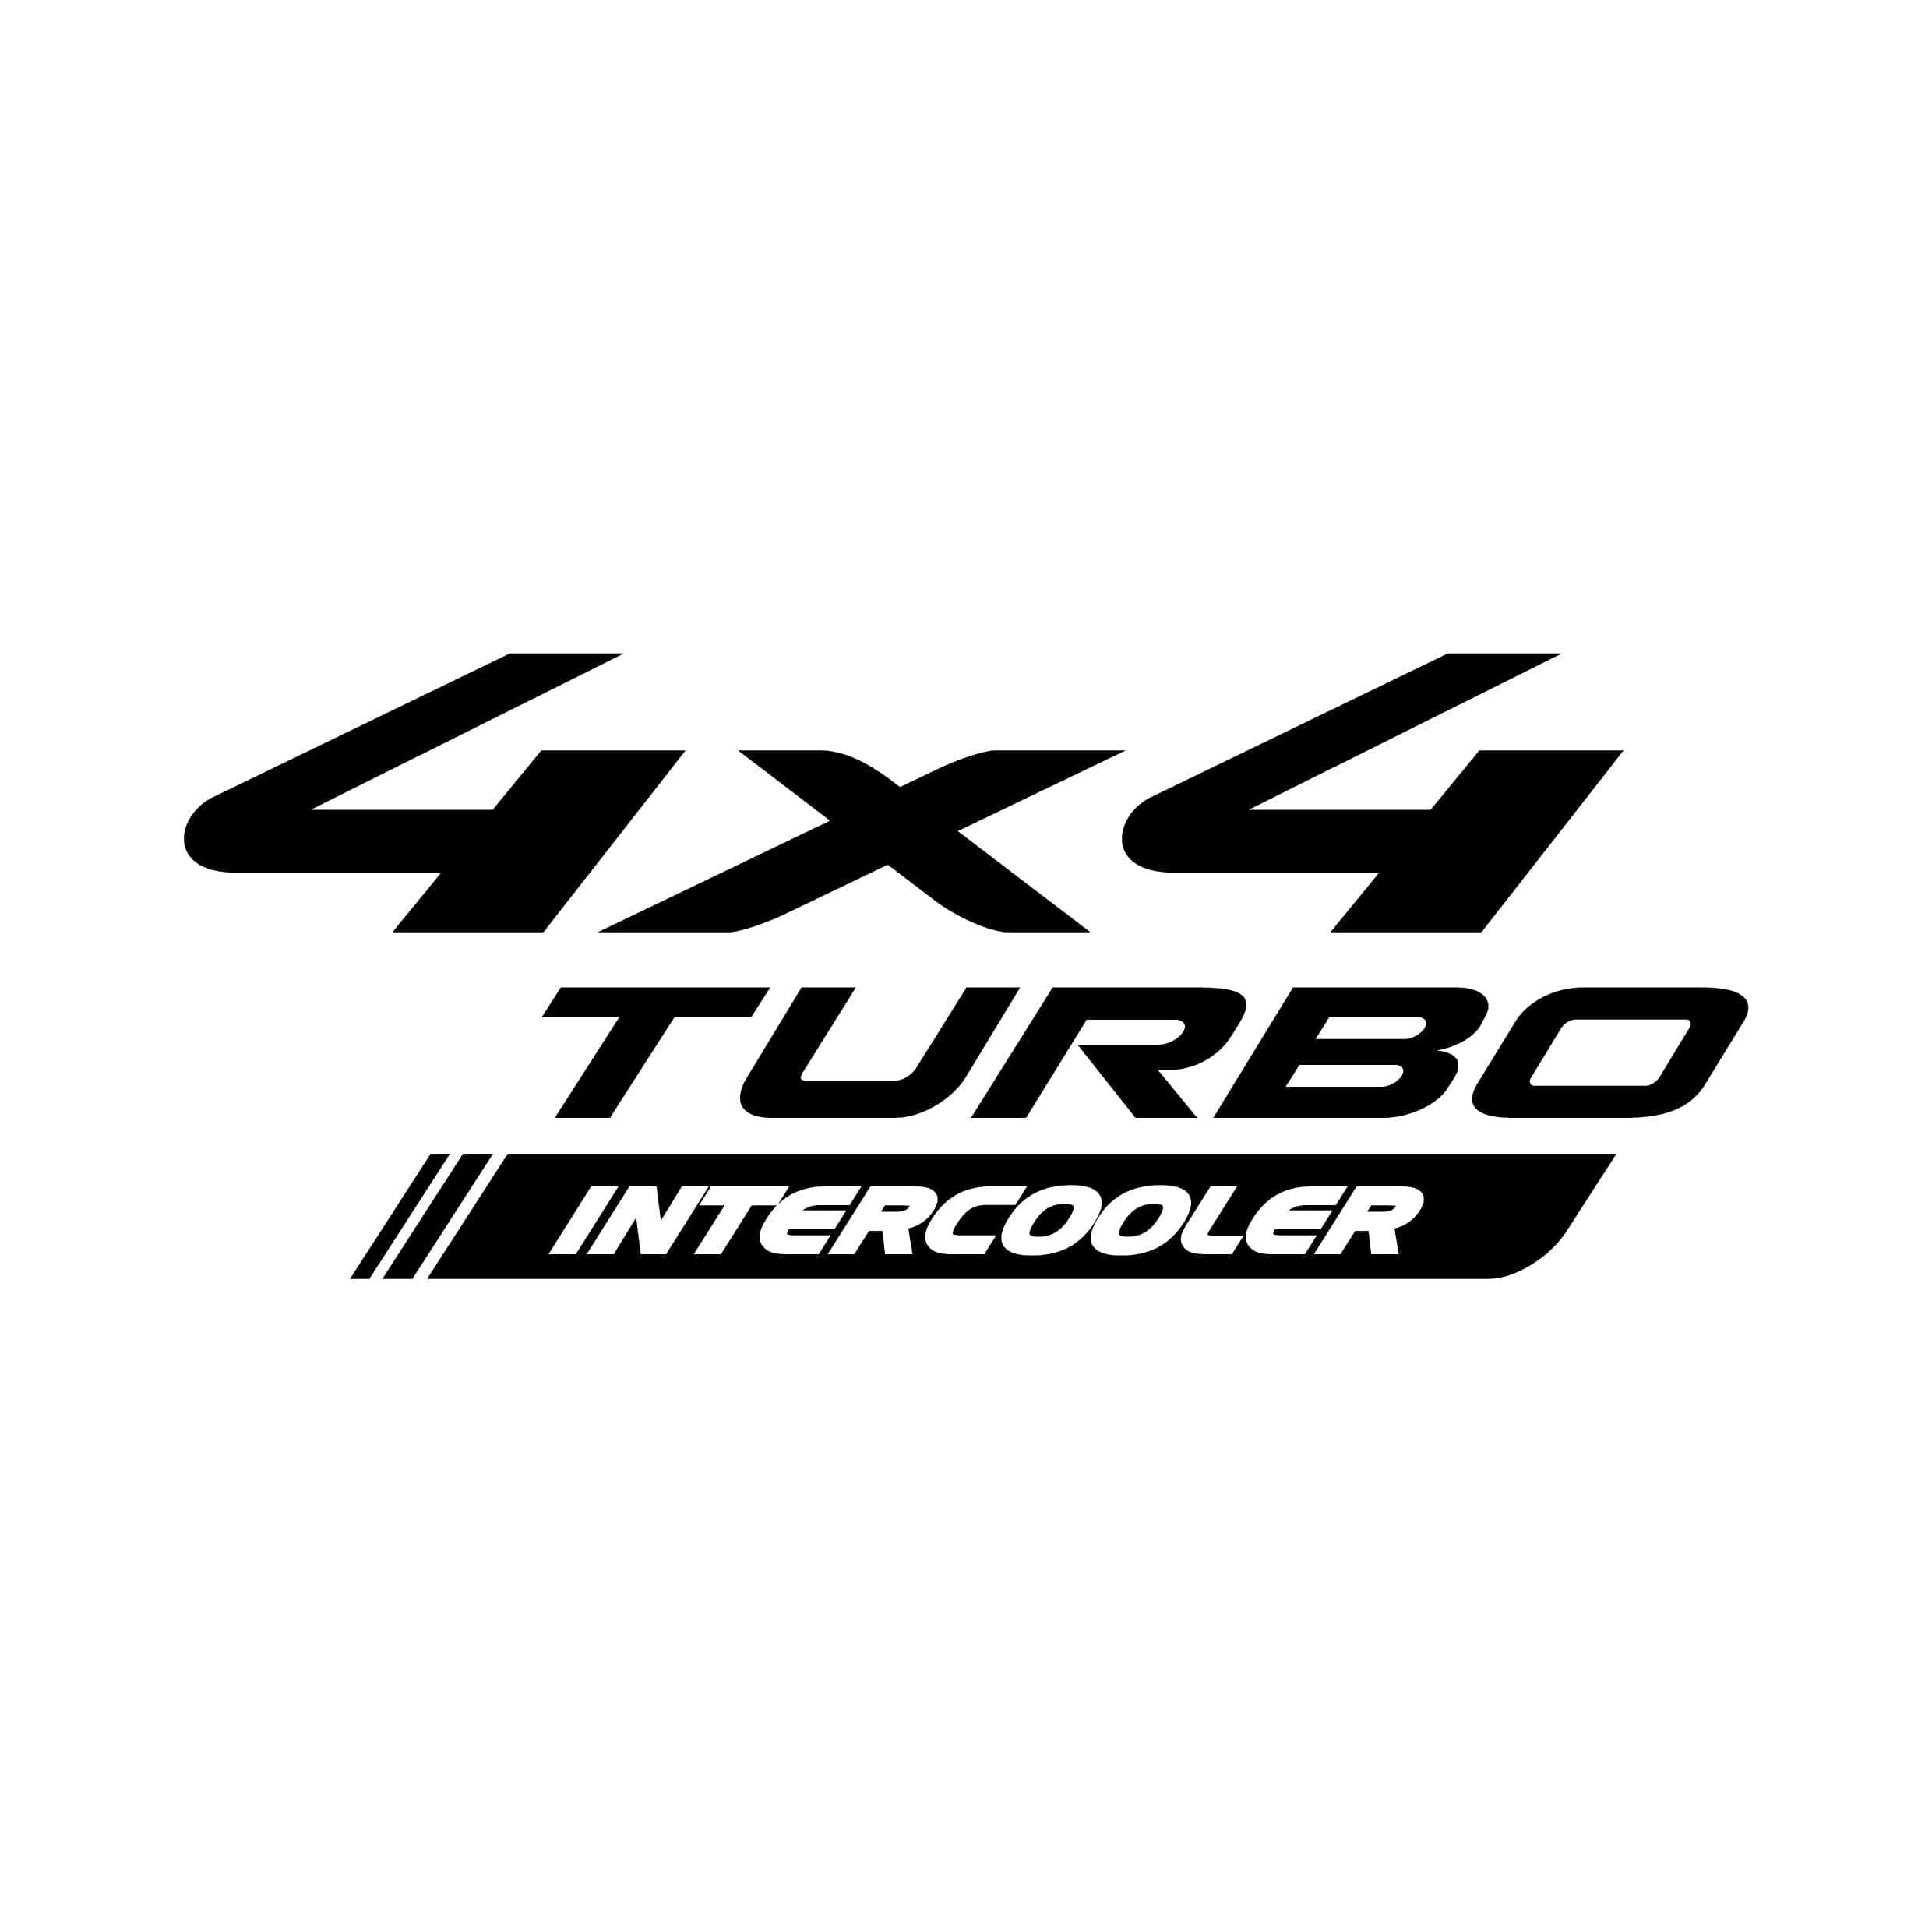 stickers-toyota-4x4-turbo-intercooler-ref15-autocollant-sticker-suv-off-road-autocollants-decals-sponsors-tuning-rallye-voiture-logo-min